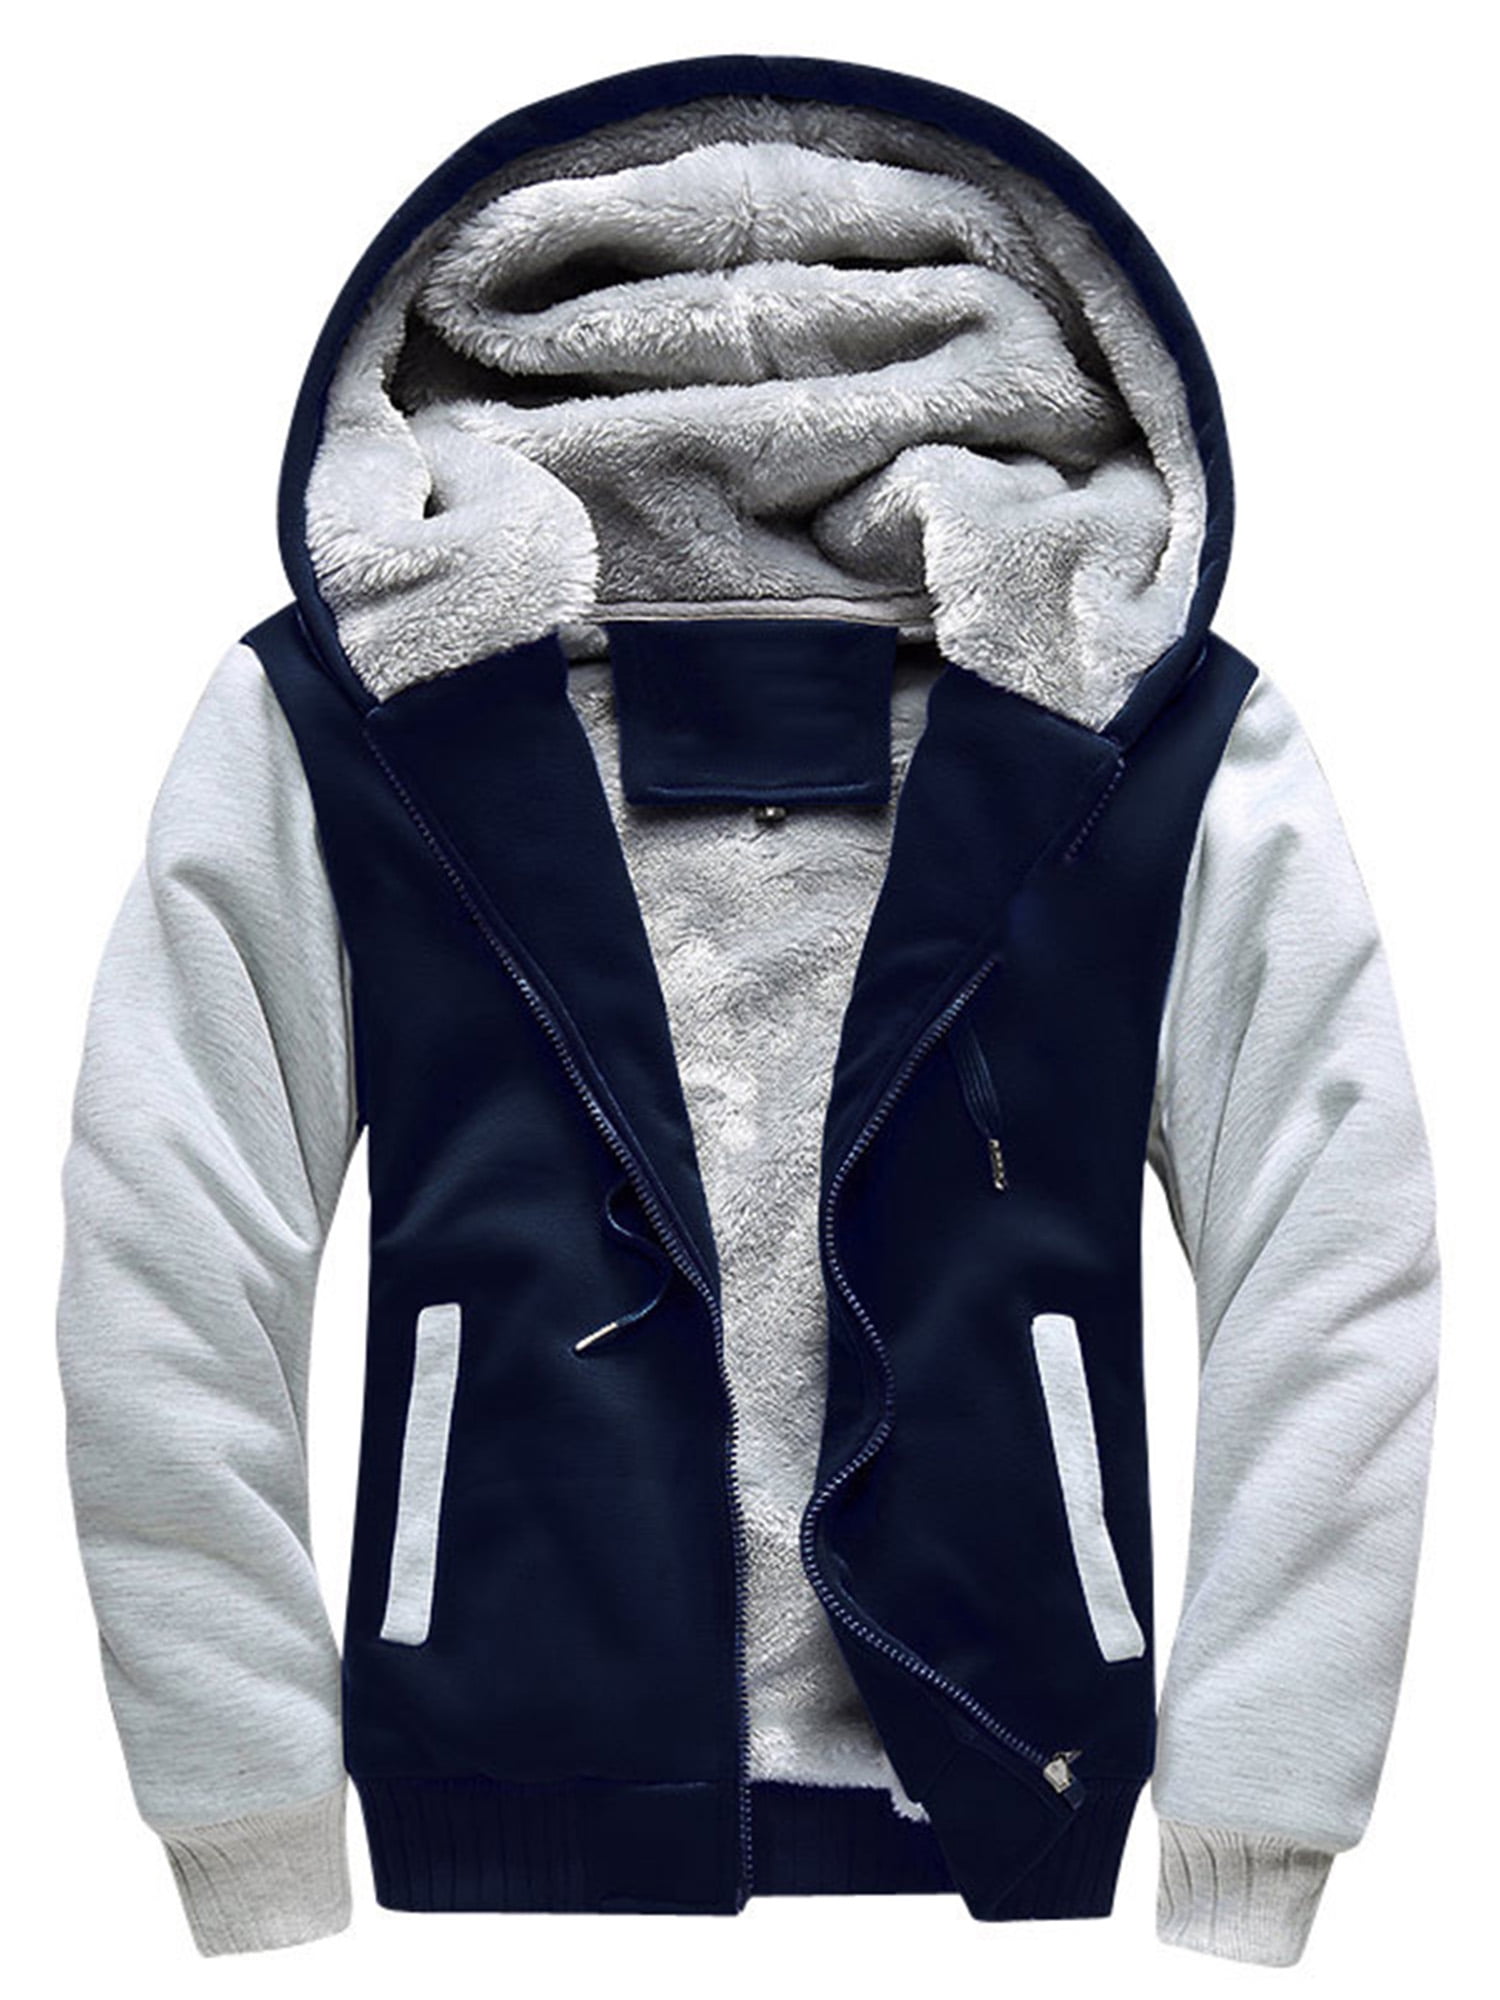 Hoodies for Men Full Zip Up Fleece Warm Jackets Thick Coats Heavyweight Sweatershirts Winter Sherpa Lined Hooded Jacket